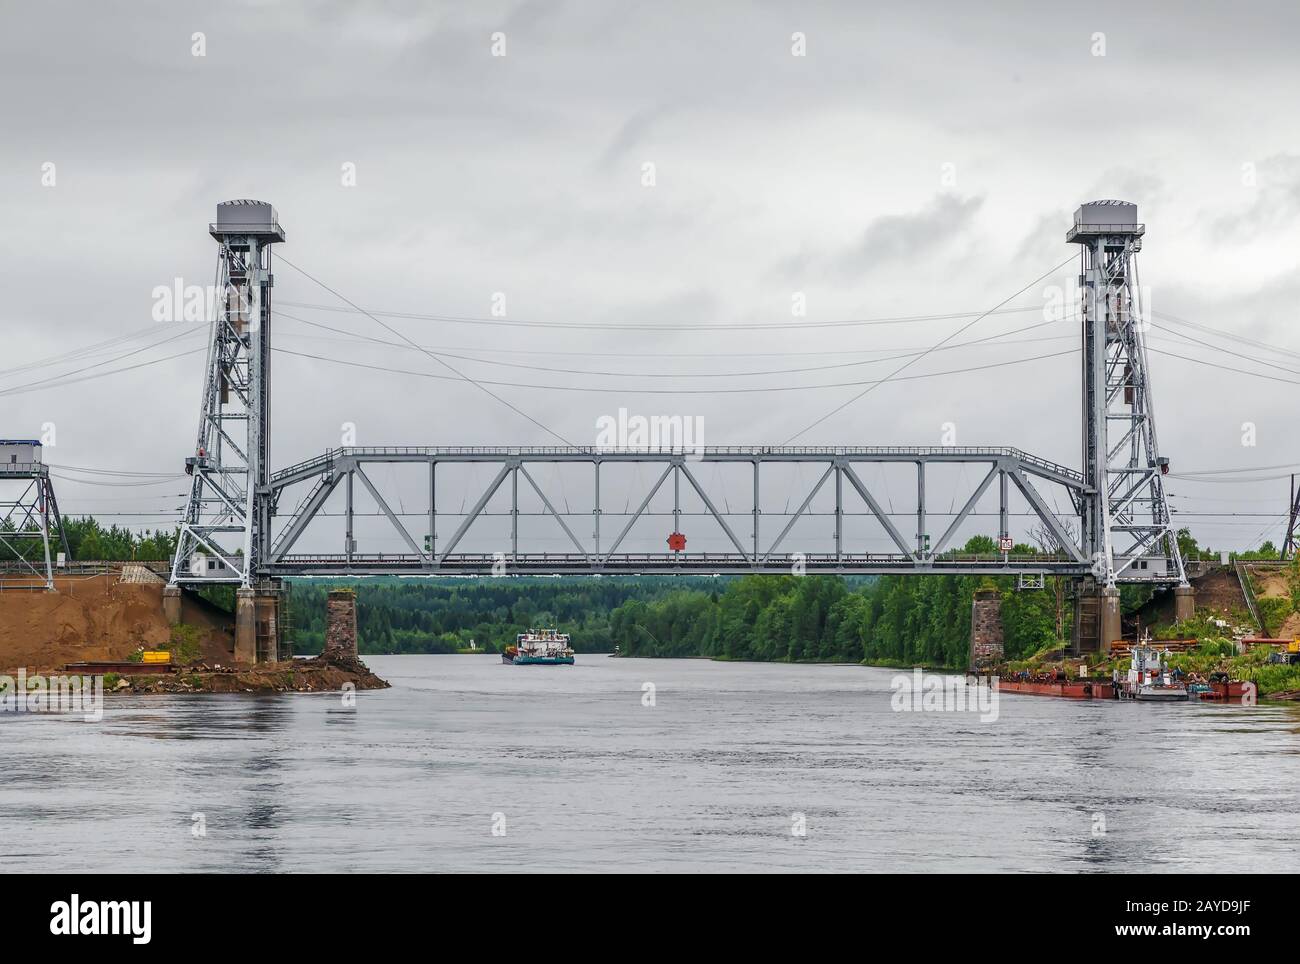 Podporozhsky drawbridge, Russia Stock Photo